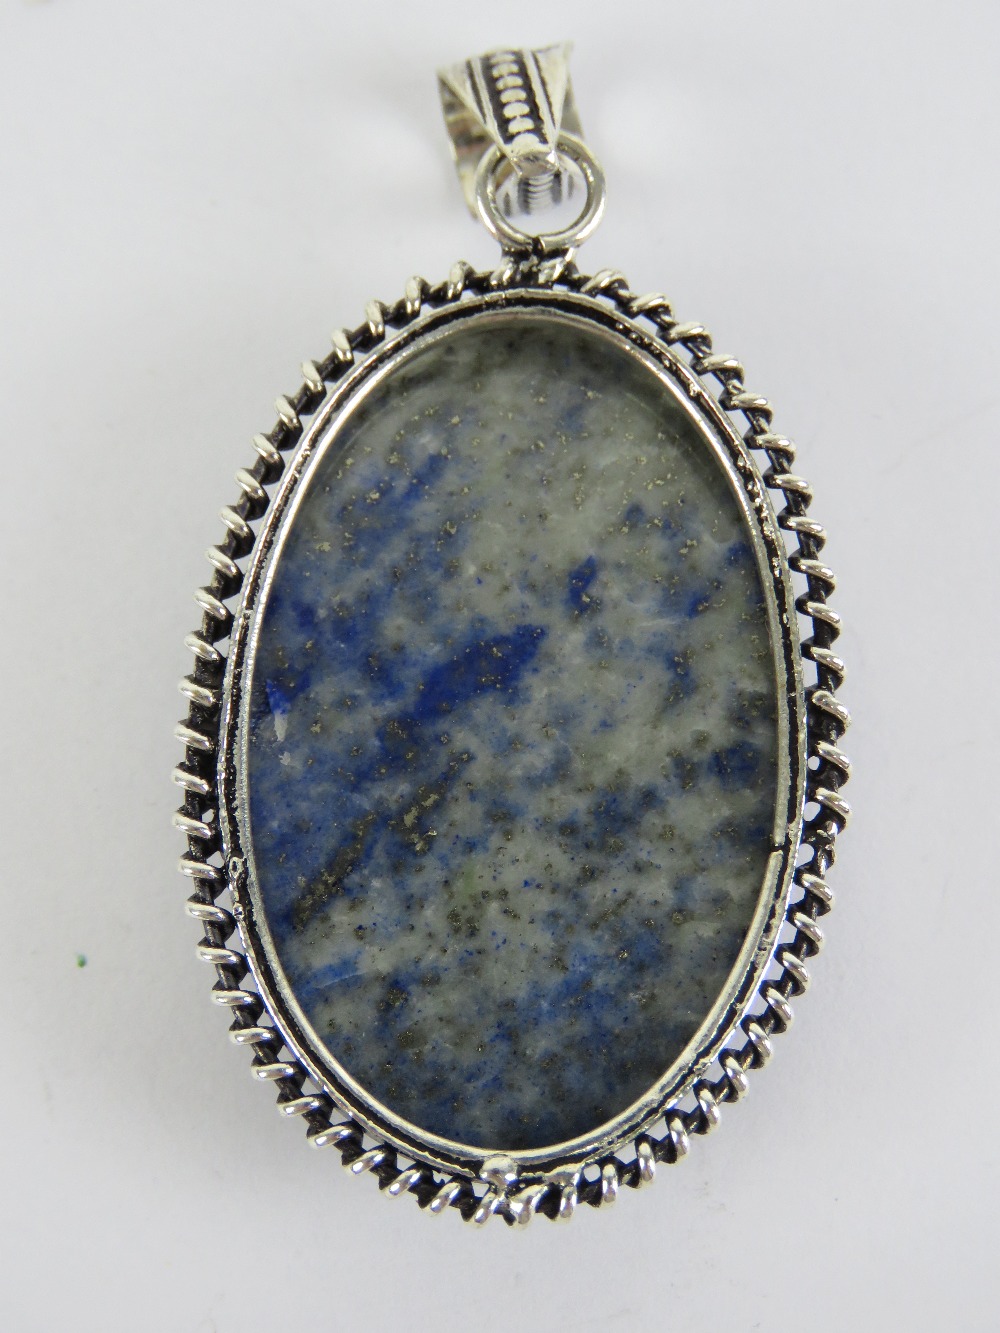 A large lapis lazuli pendant stamped 925 measuring 6cm inc bale. - Image 2 of 2